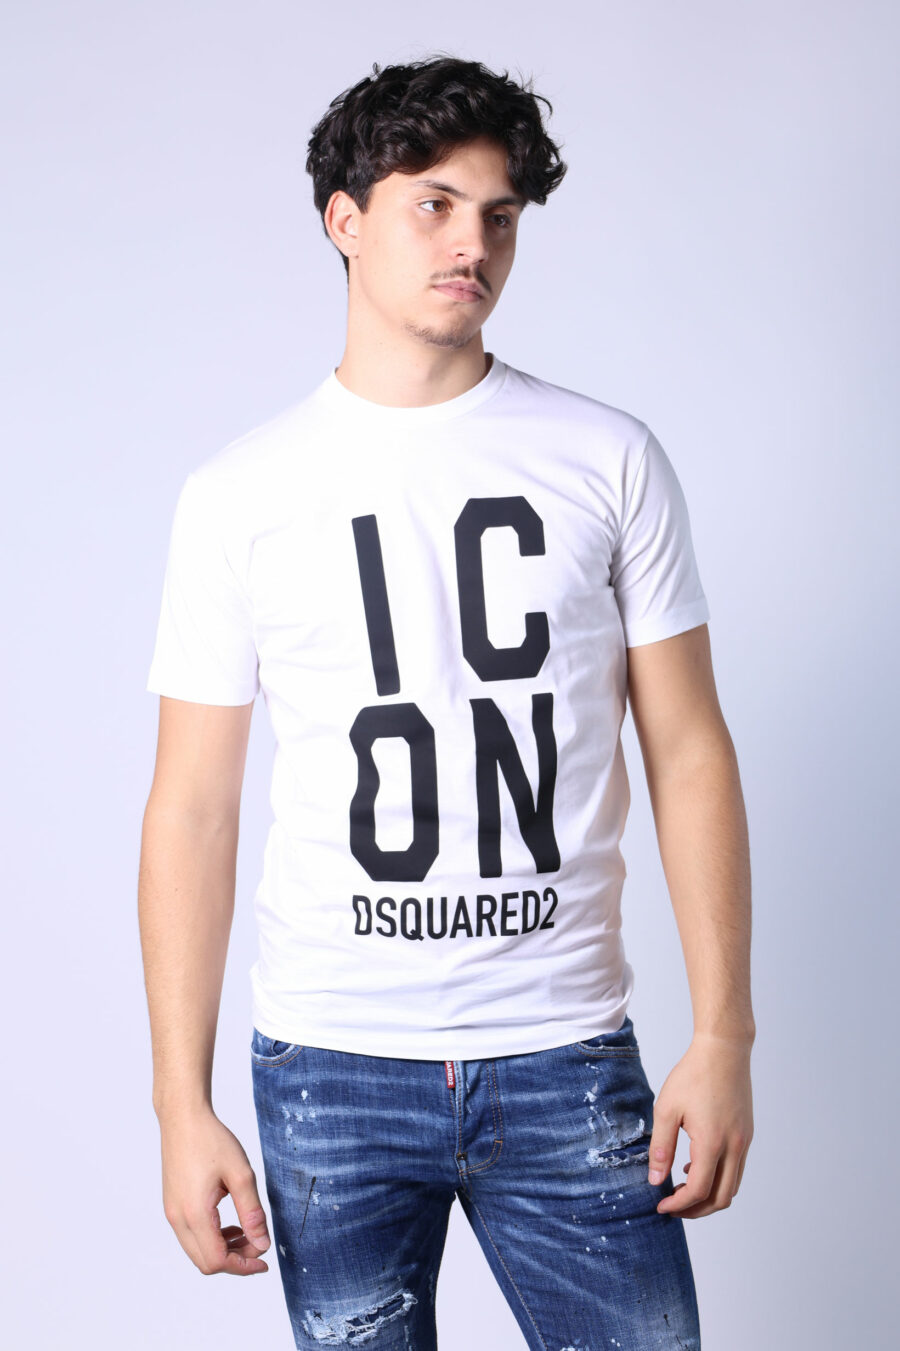 Camiseta blanca con maxilogo "icon" vertical - Untitled Catalog 05302